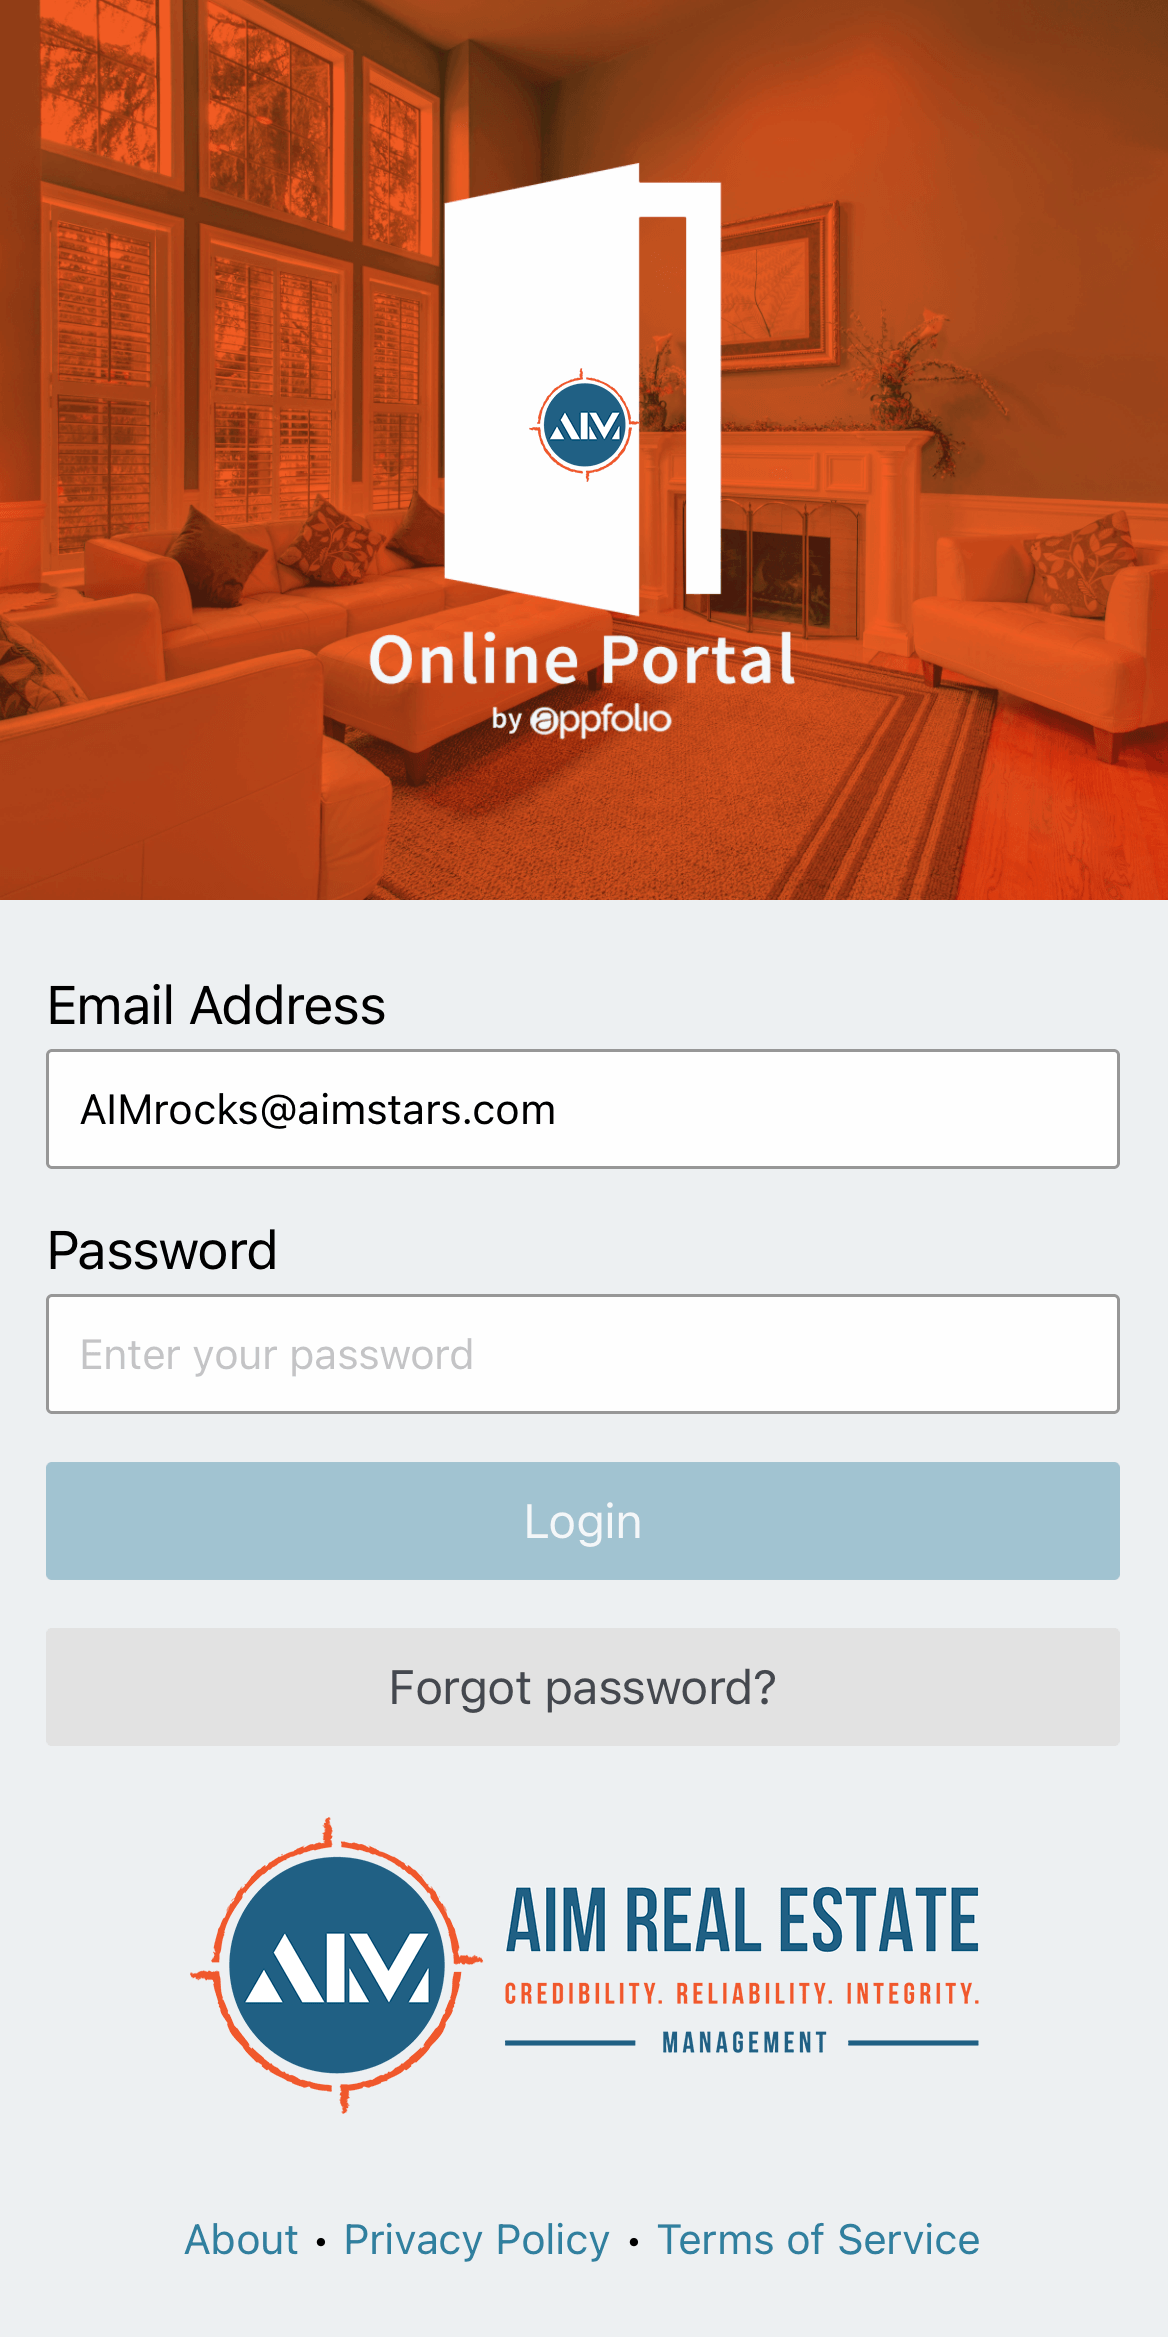 iPhone displaying Online Portal